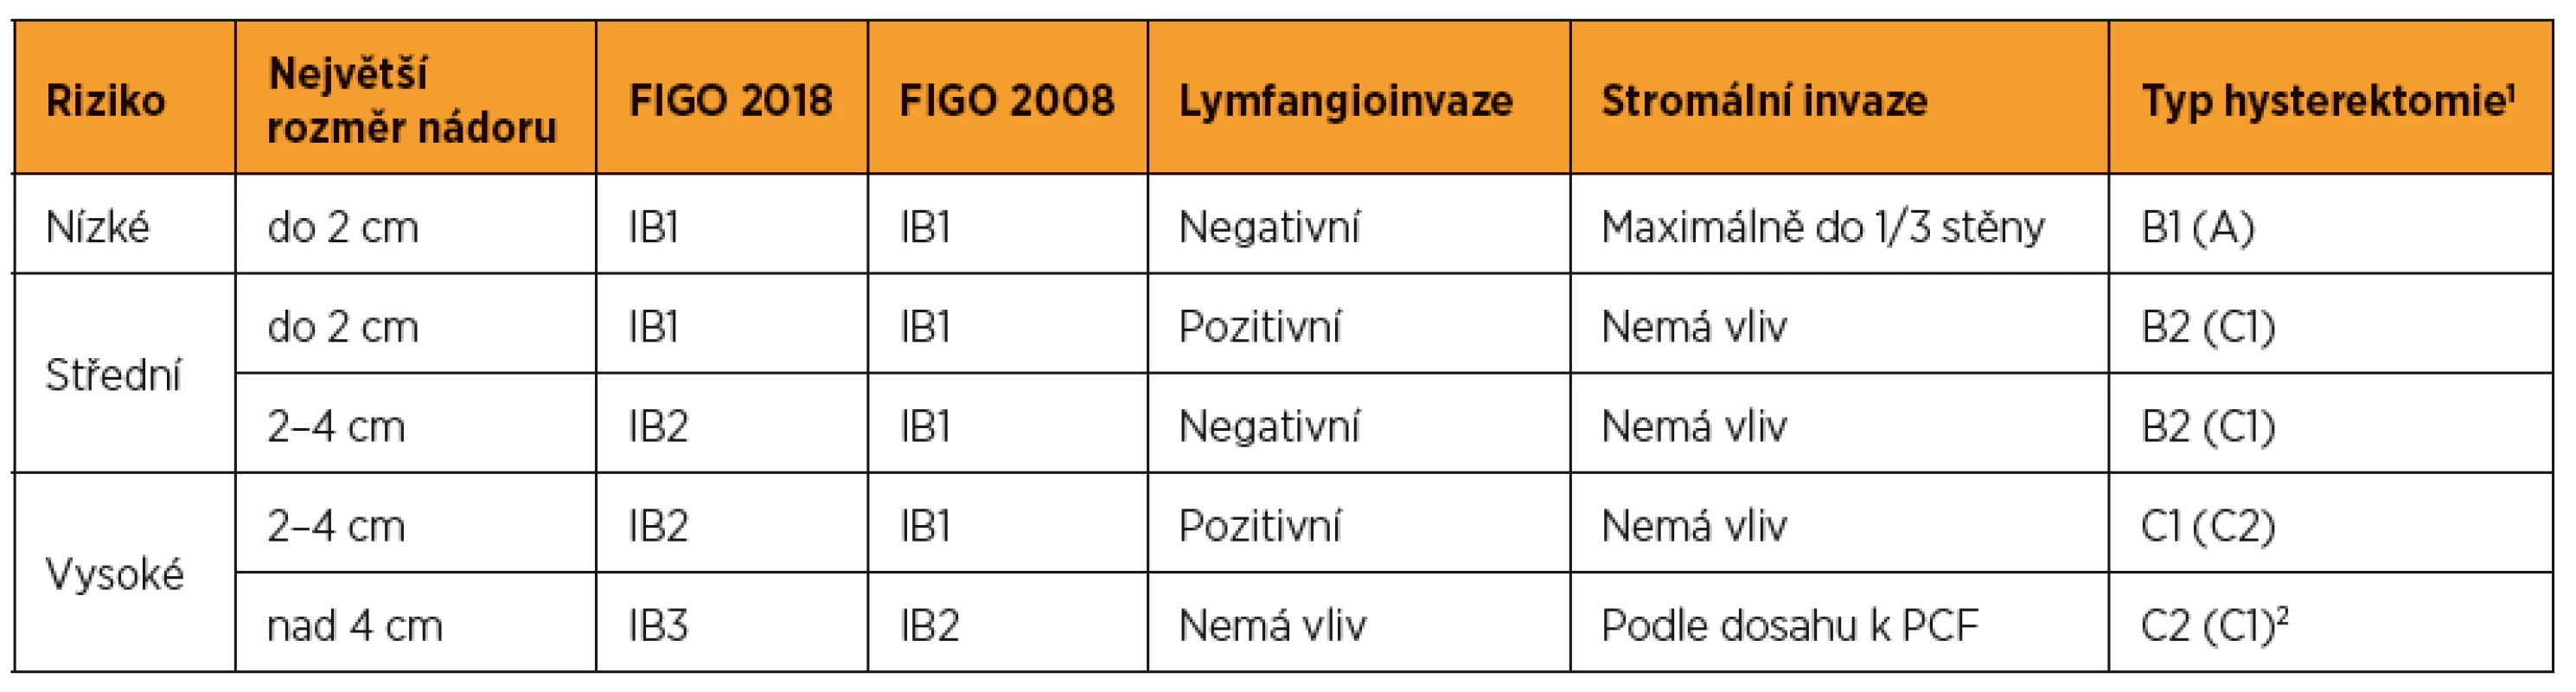 Doporučené typy hysterektomií podle kritérií ESGO [8]